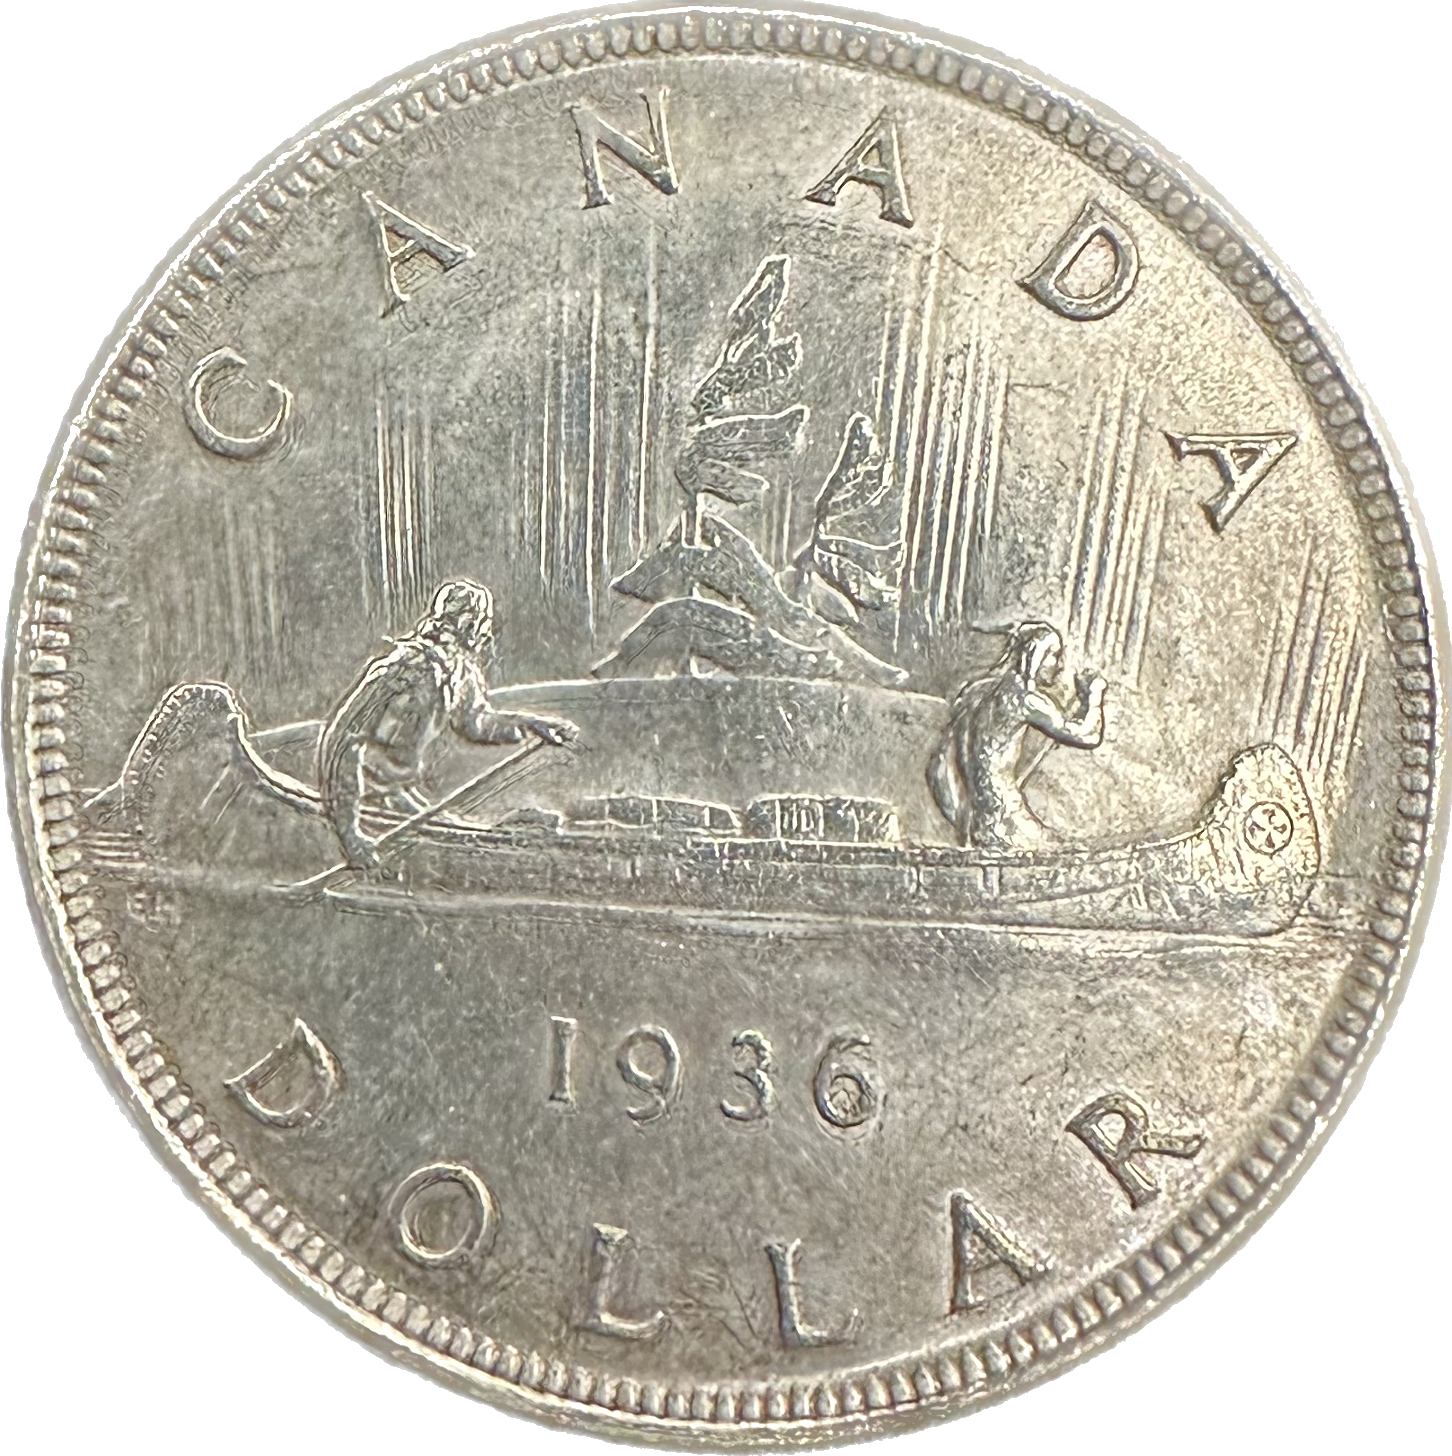 Canada Silver Dollar 1936 MS-64 Coin